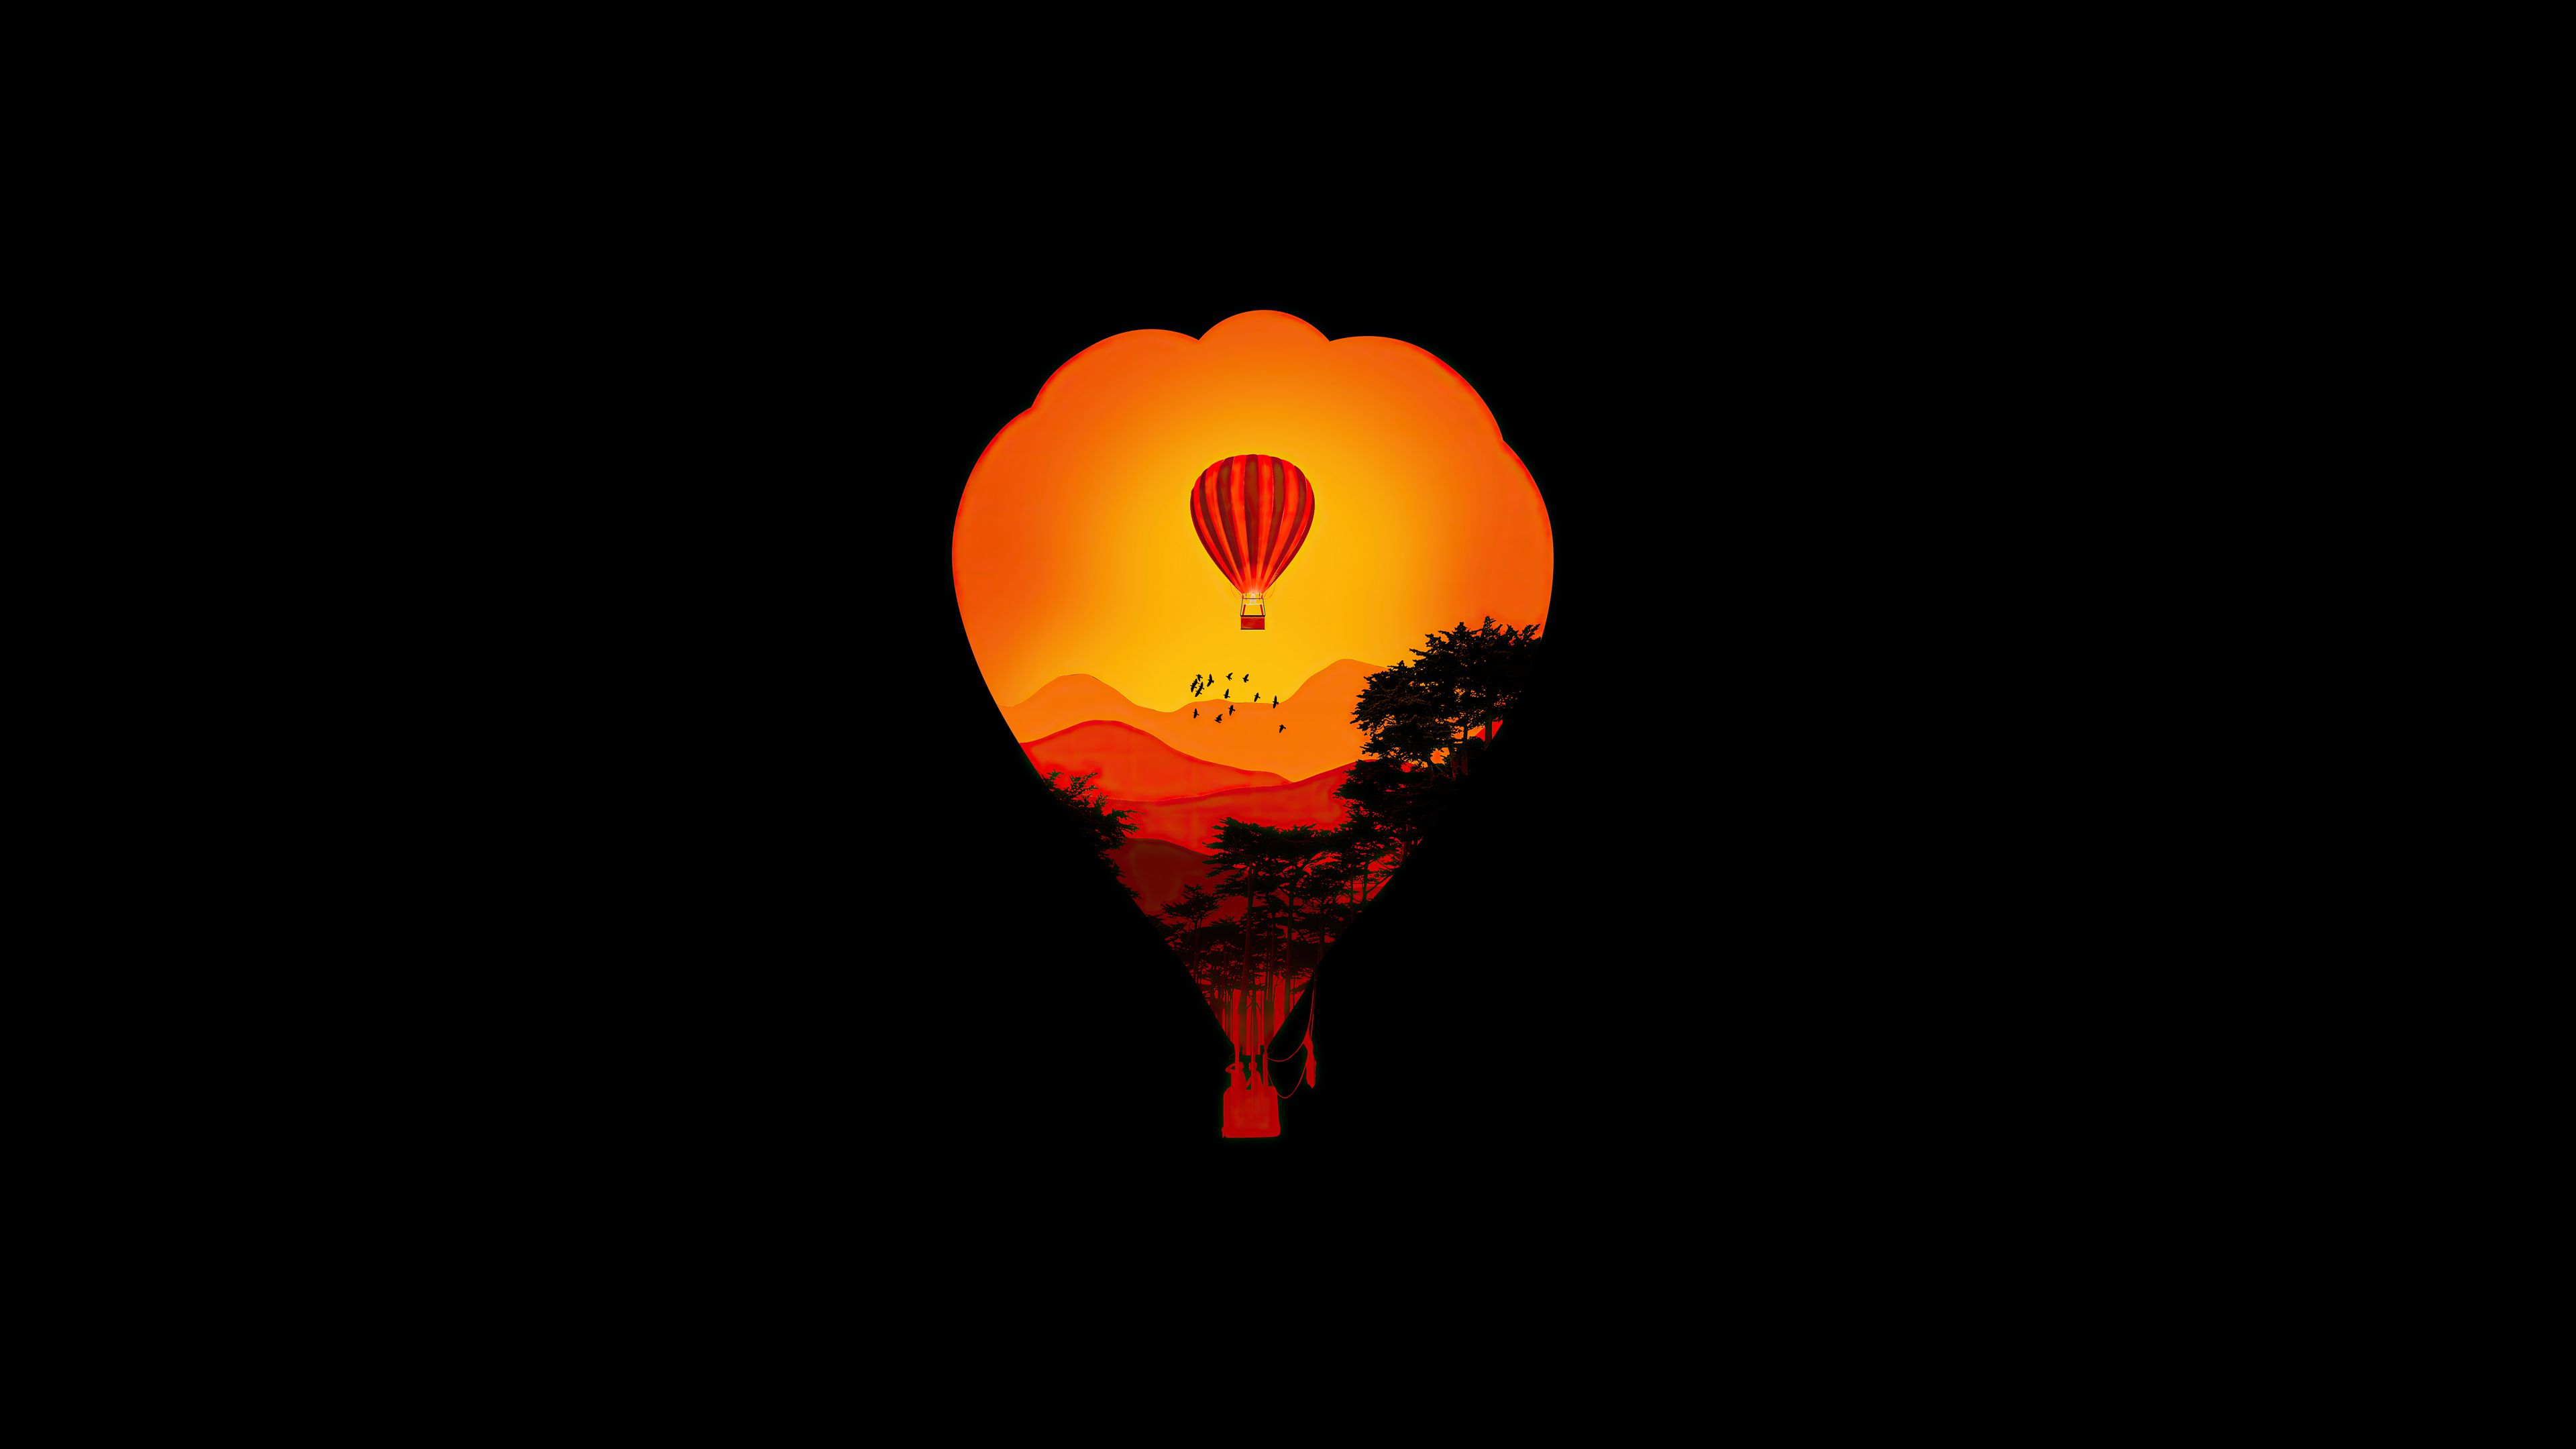 Air Balloon Minimal Dark Art 4k, HD Artist, 4k Wallpaper, Image, Background, Photo and Picture